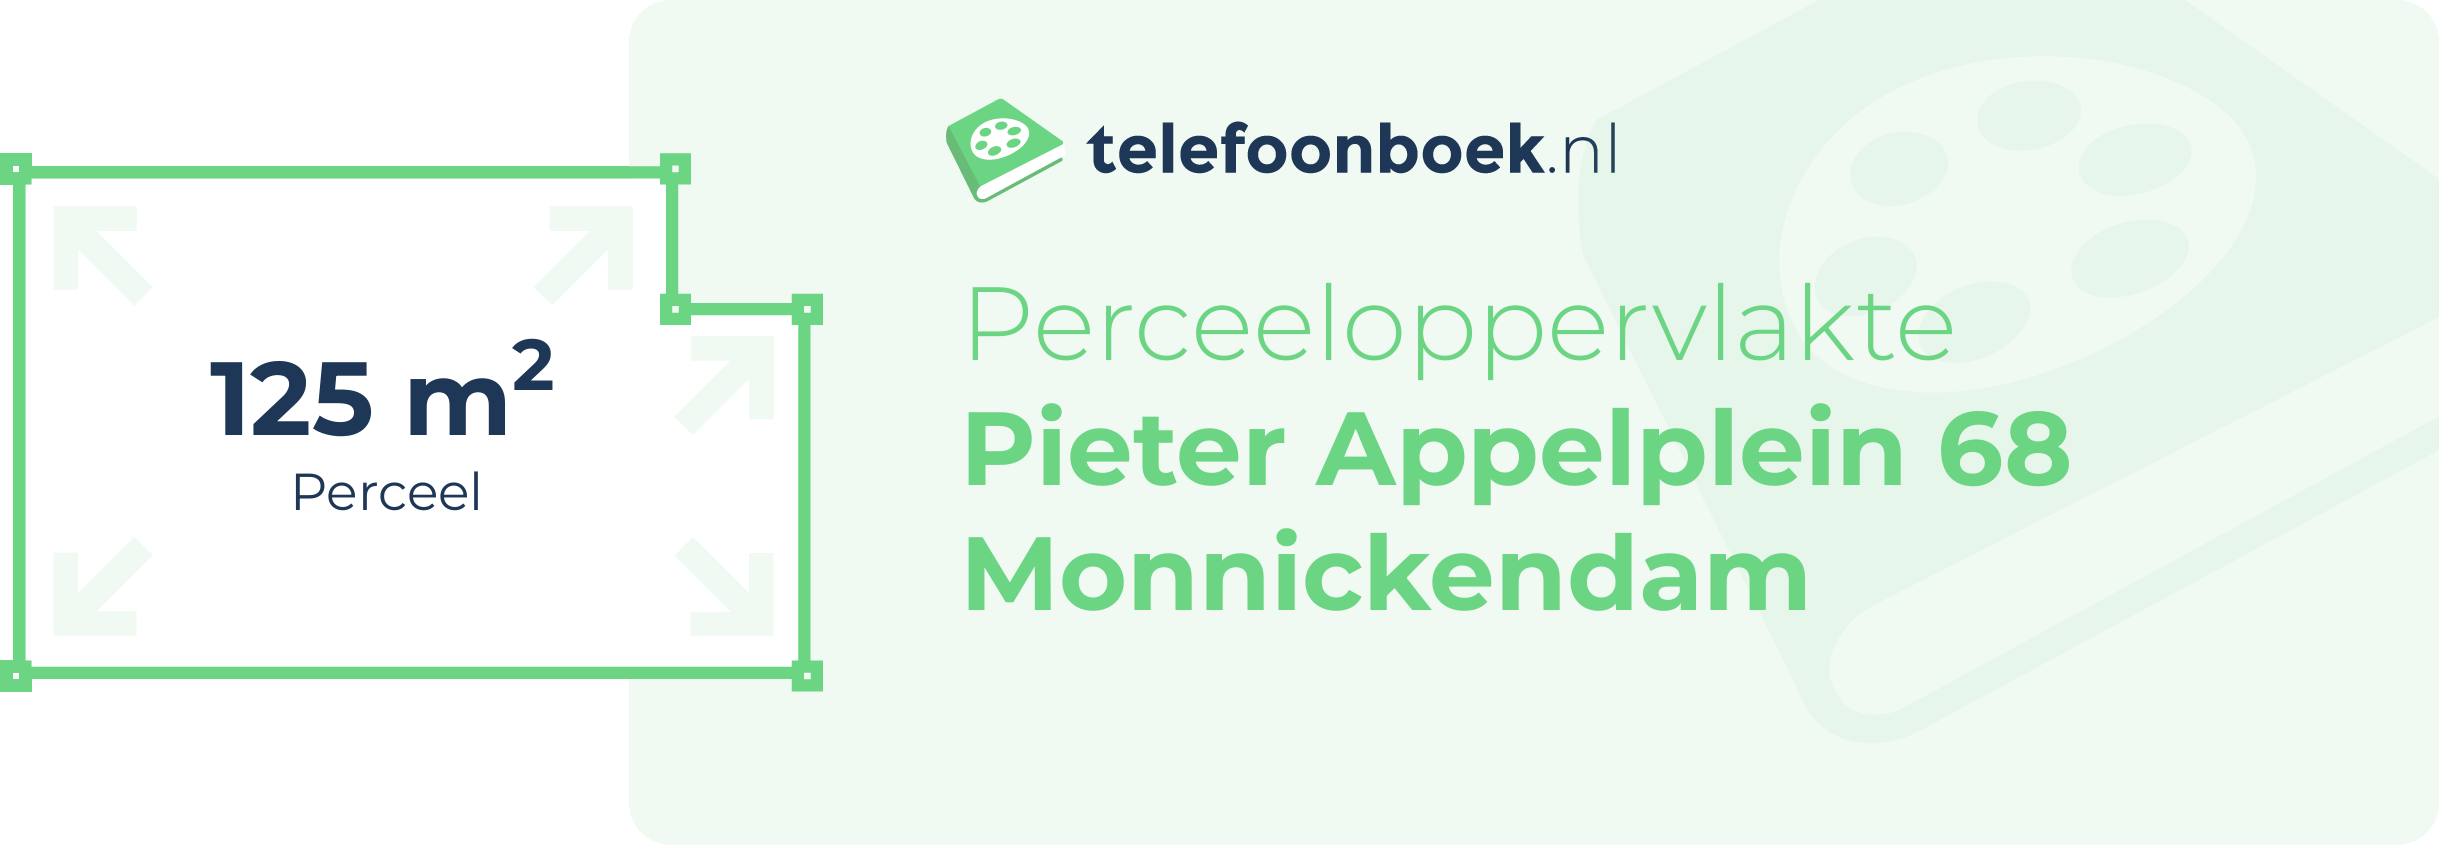 Perceeloppervlakte Pieter Appelplein 68 Monnickendam